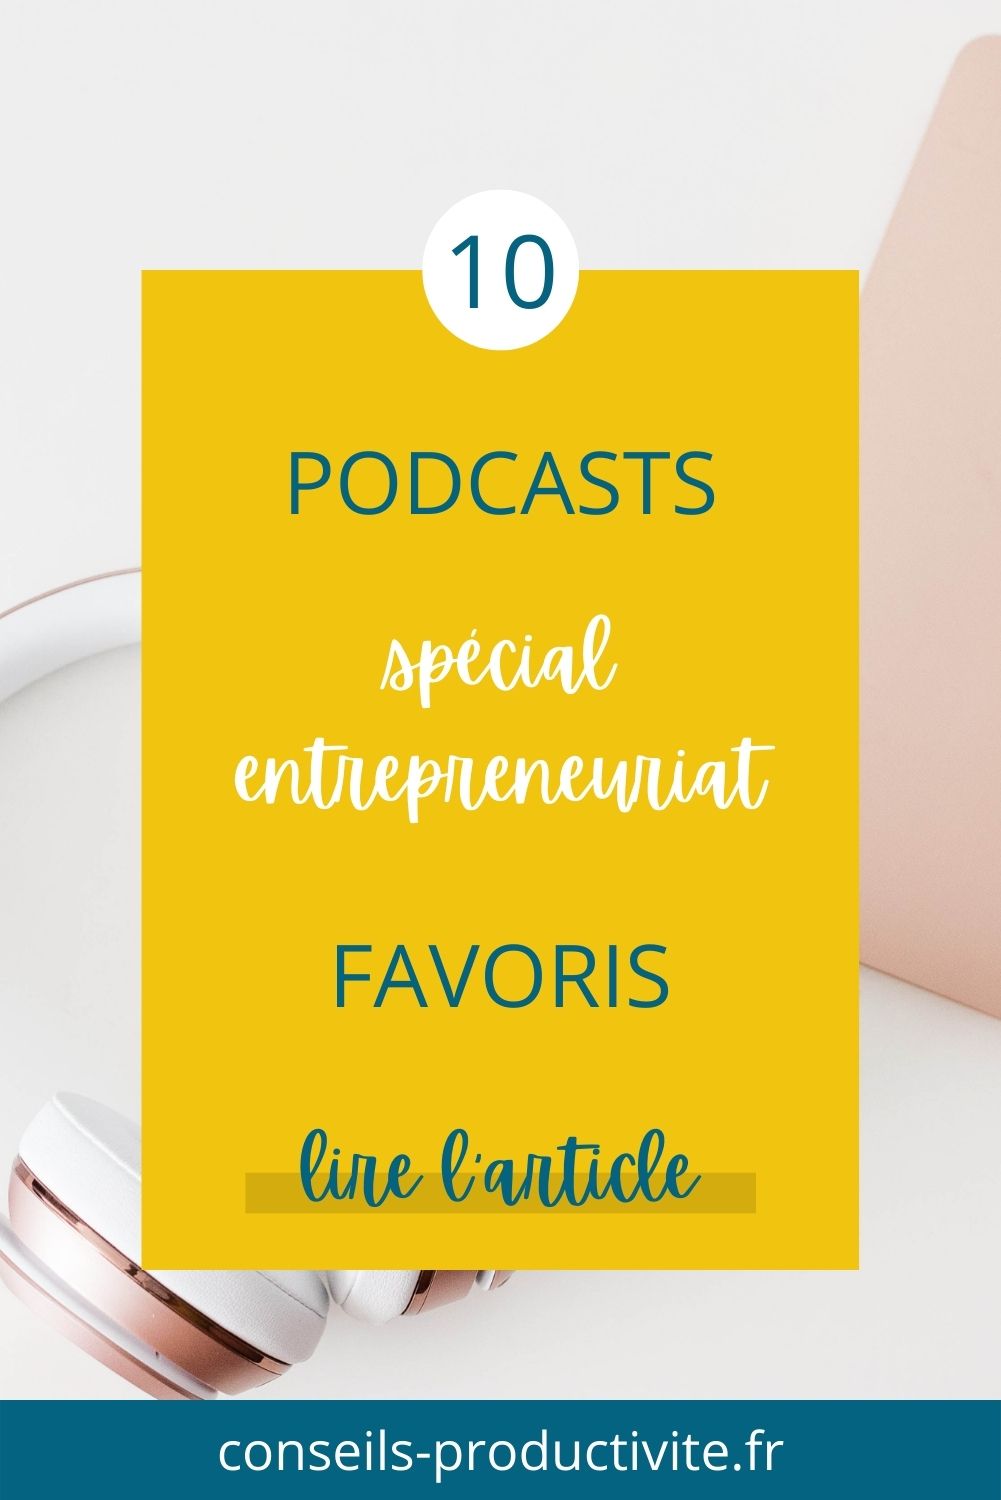 10-podcasts-special-entrepreneuriat-preferes